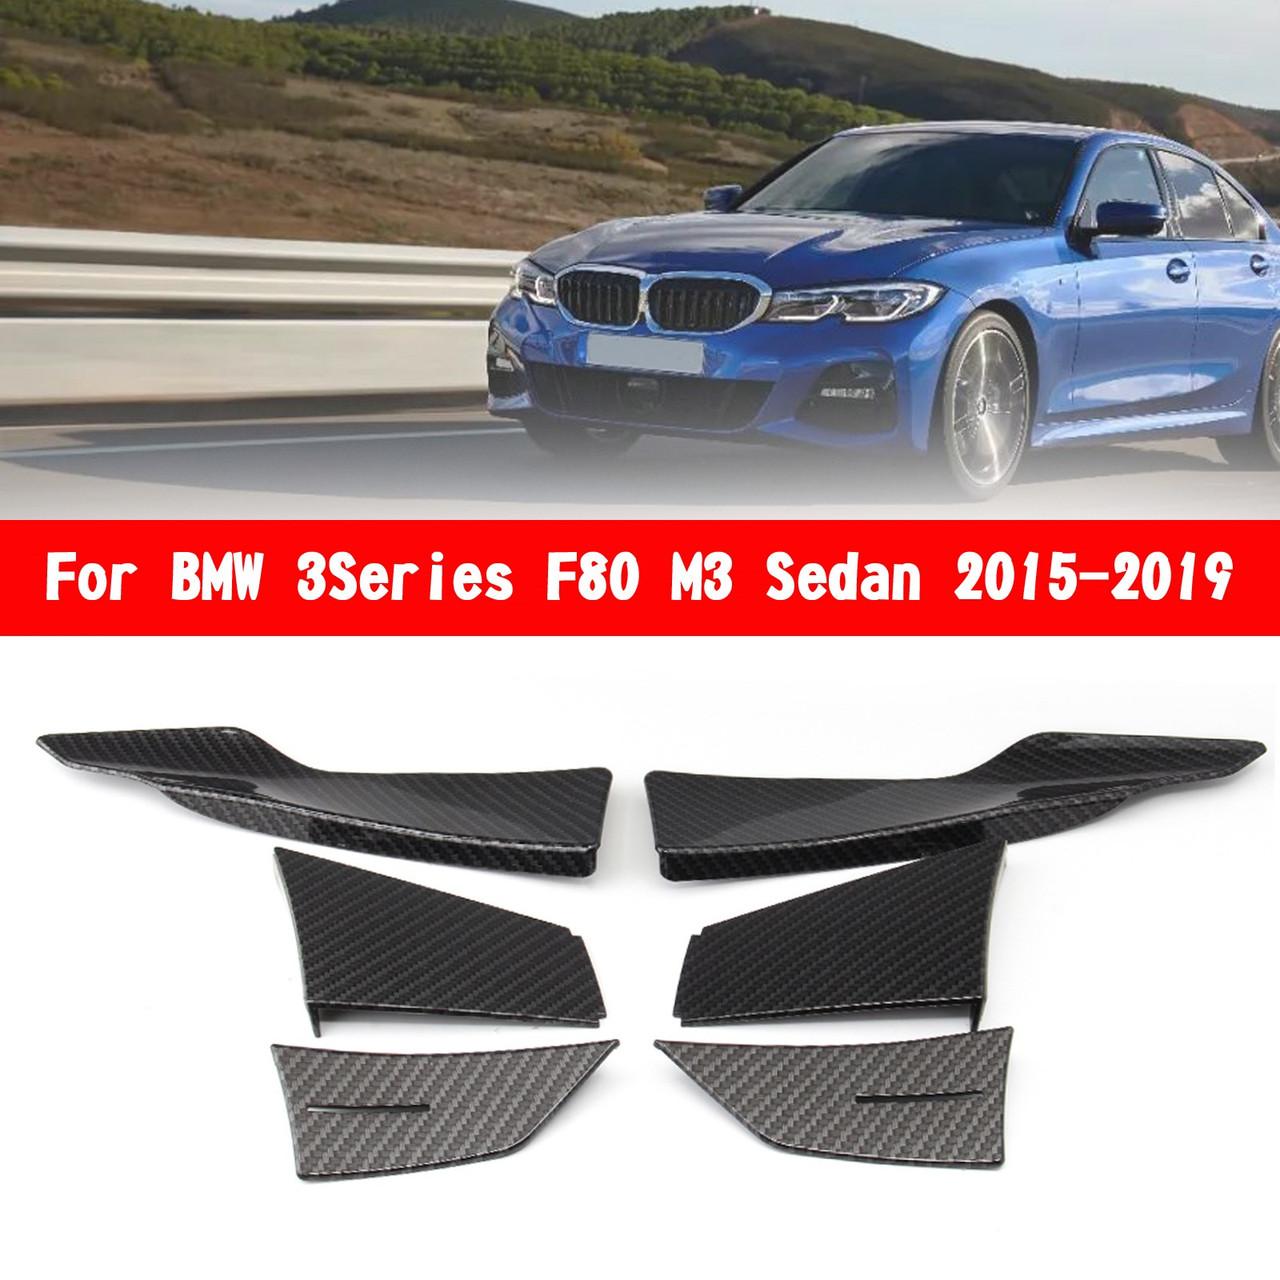 Pair Car Side Skirts Rocker Splitters Diffuser Winglet Wings Fits For BMW 3-Series F80 M3 15-19 Carbon Fiber